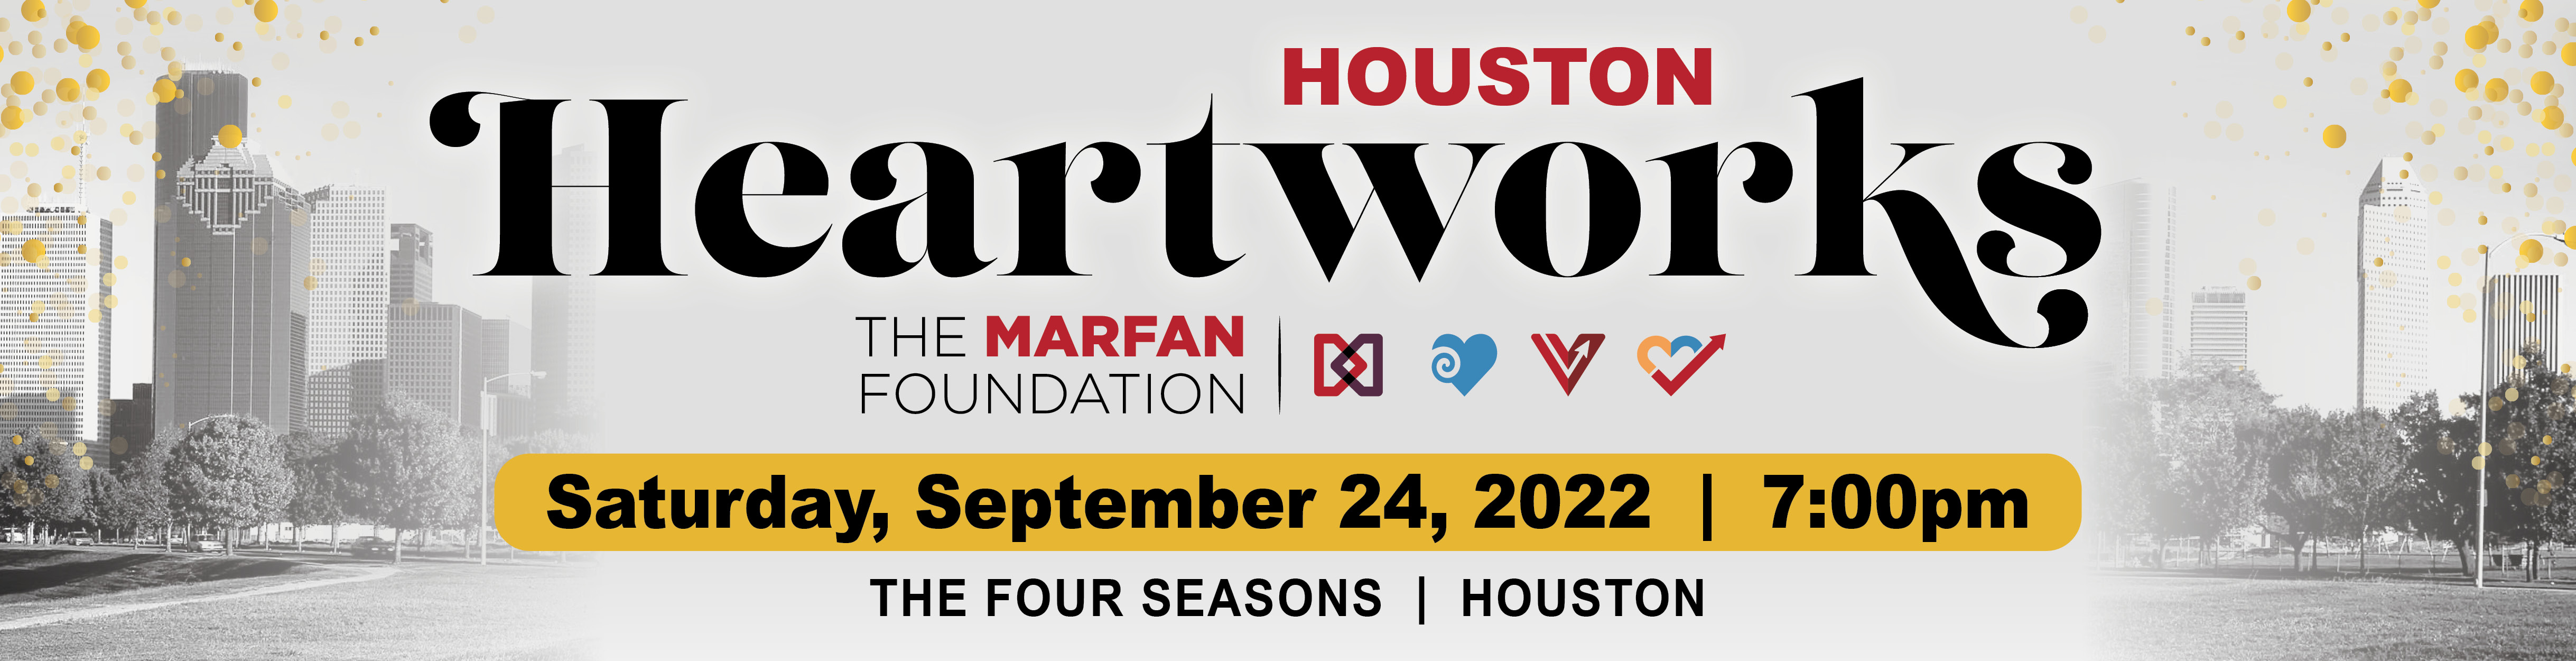 Houston Heartworks The Marfan Foundation Saturday September 24, 2022 7:00pm The Four Seasons Houston